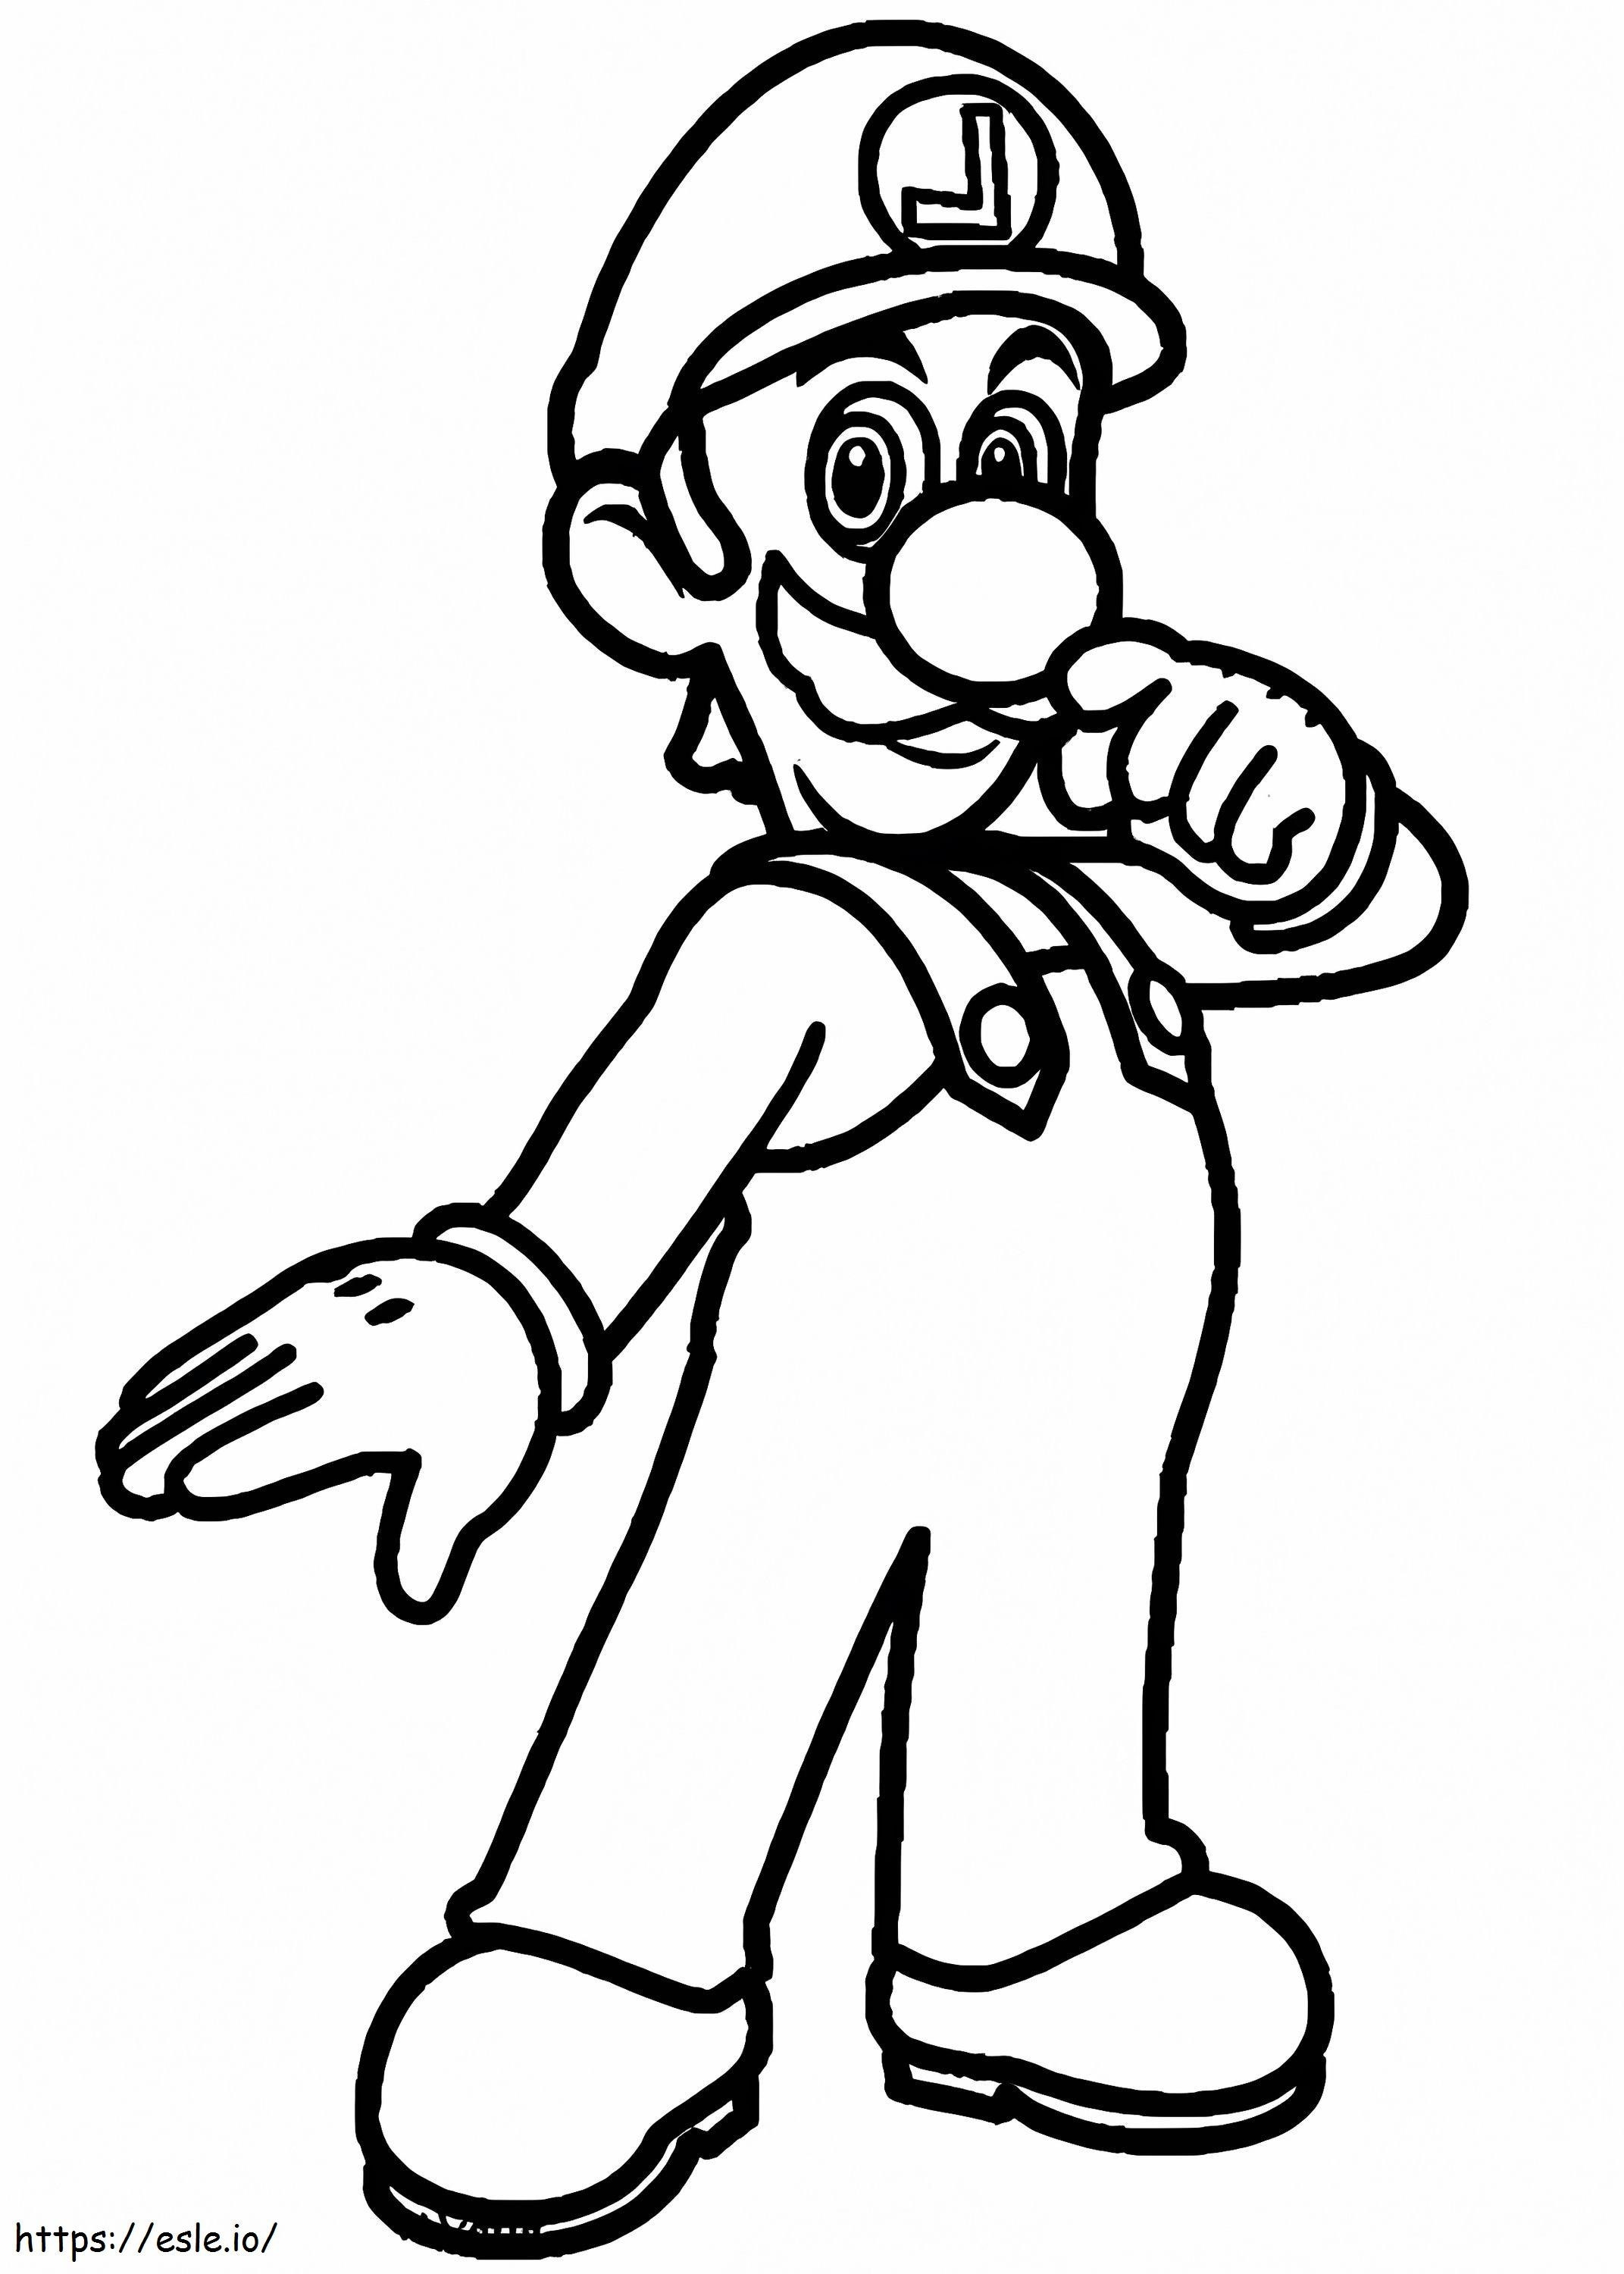 Coloriage Luigi De Super Mario 3 à imprimer dessin